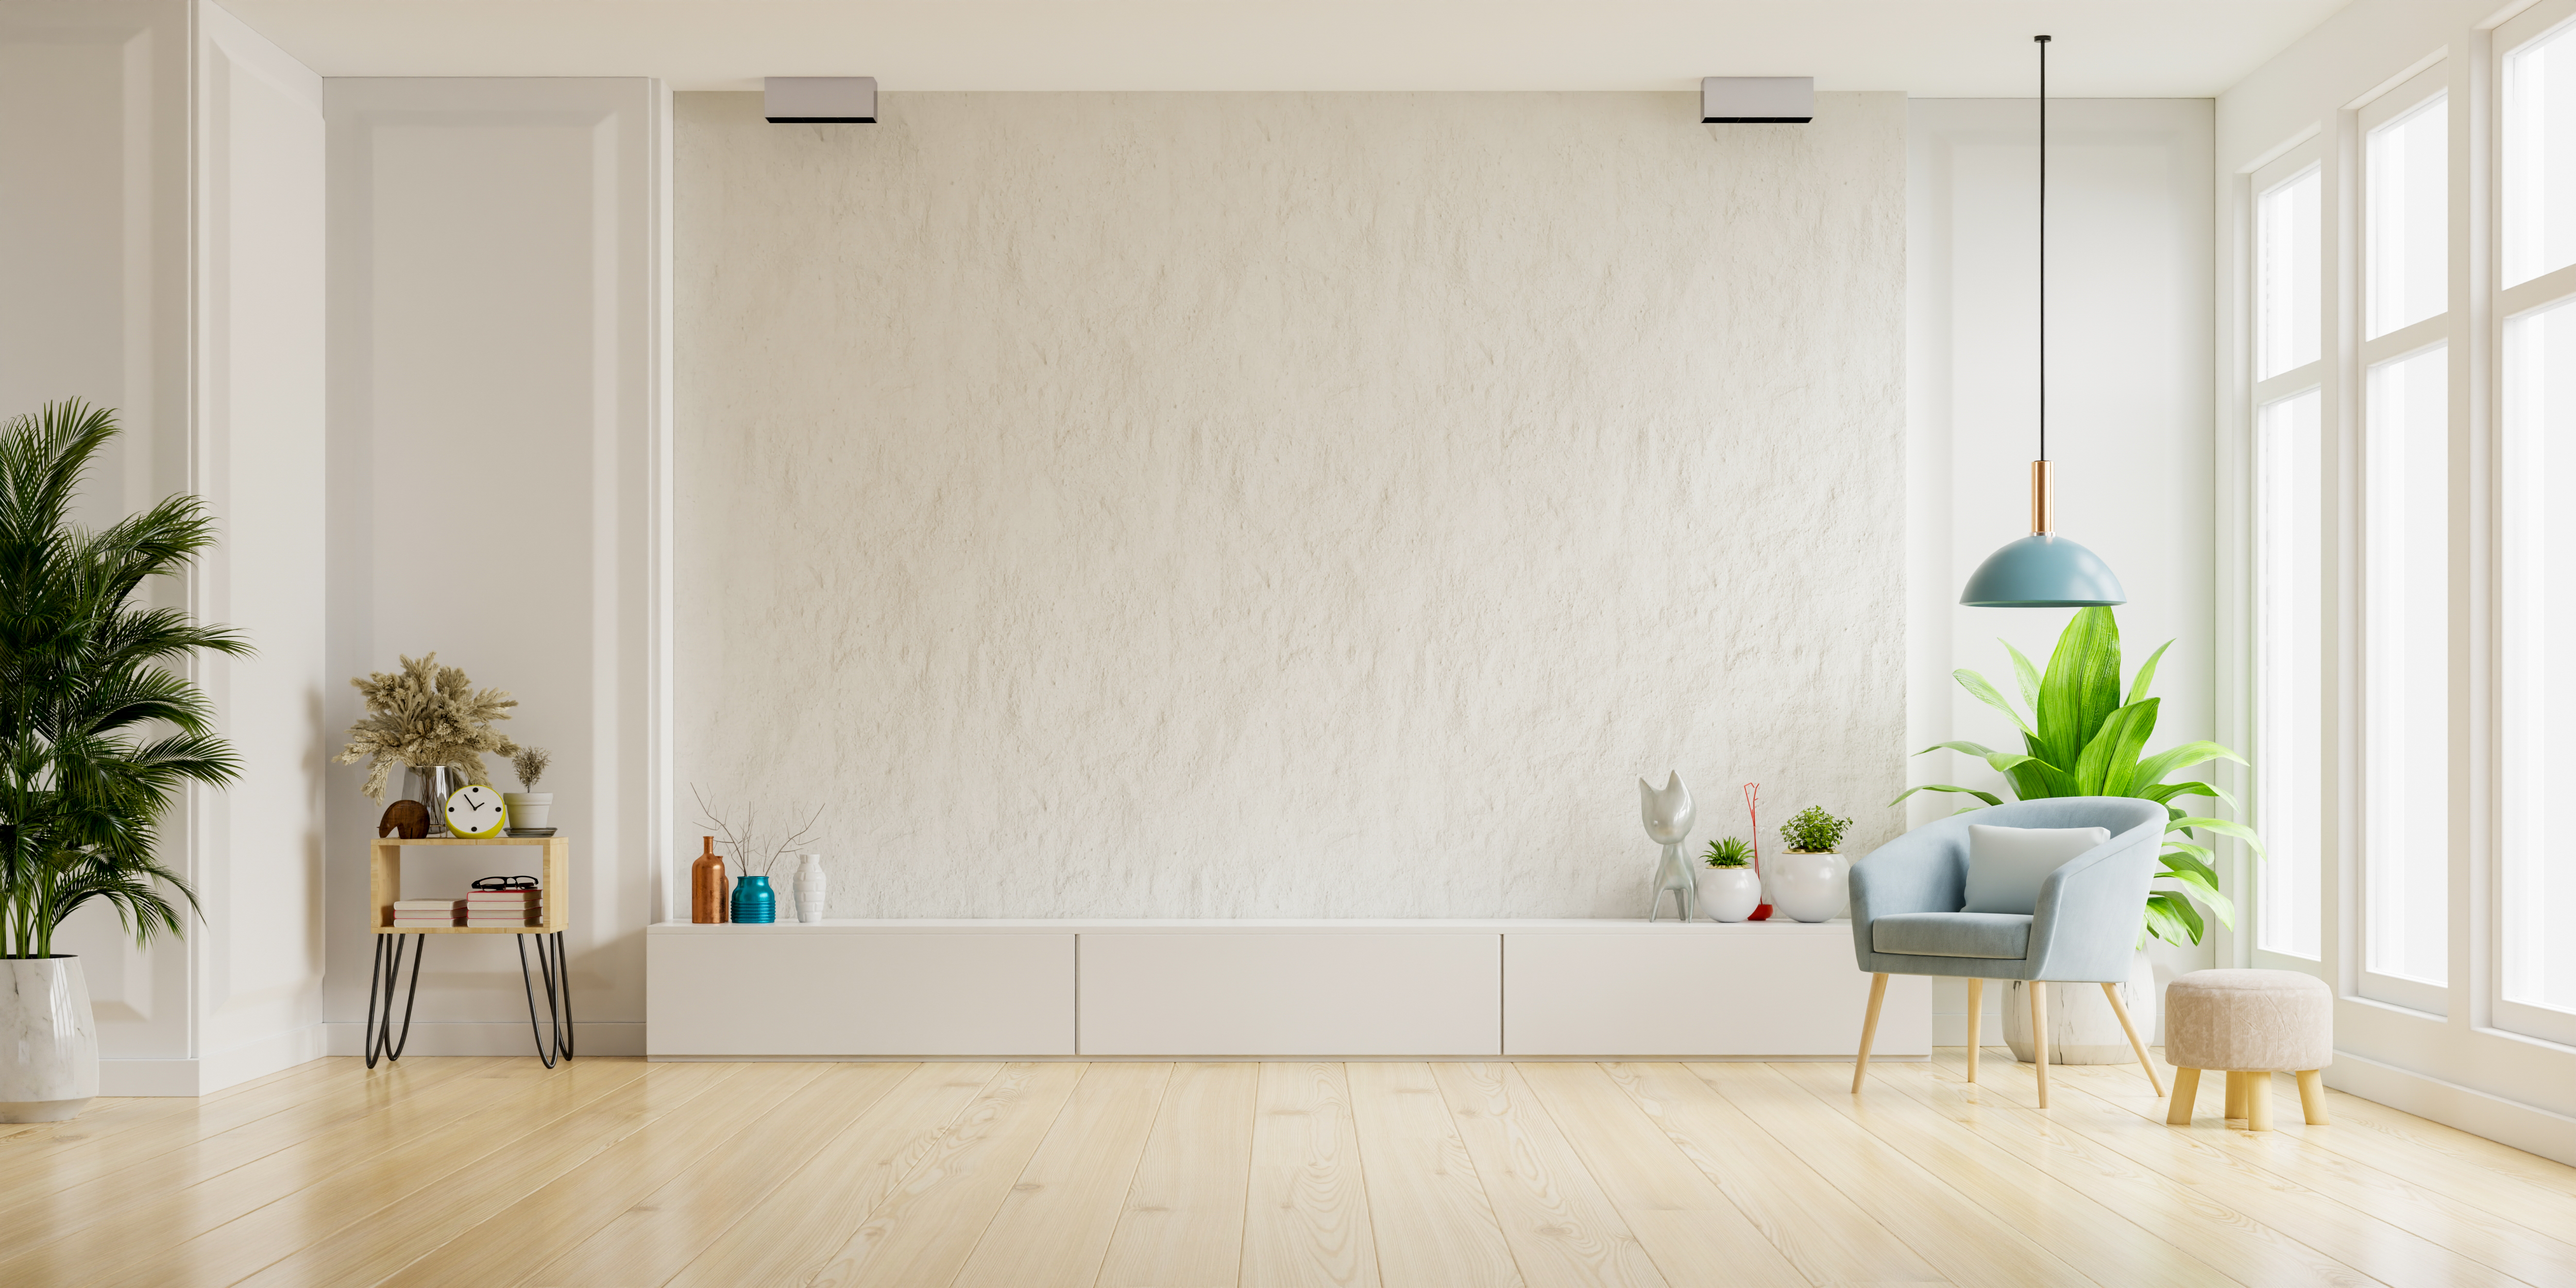 cabinet-tv-white-plaster-wall-living-room-with-armchair-minimal-design-3d-rendering.jpg